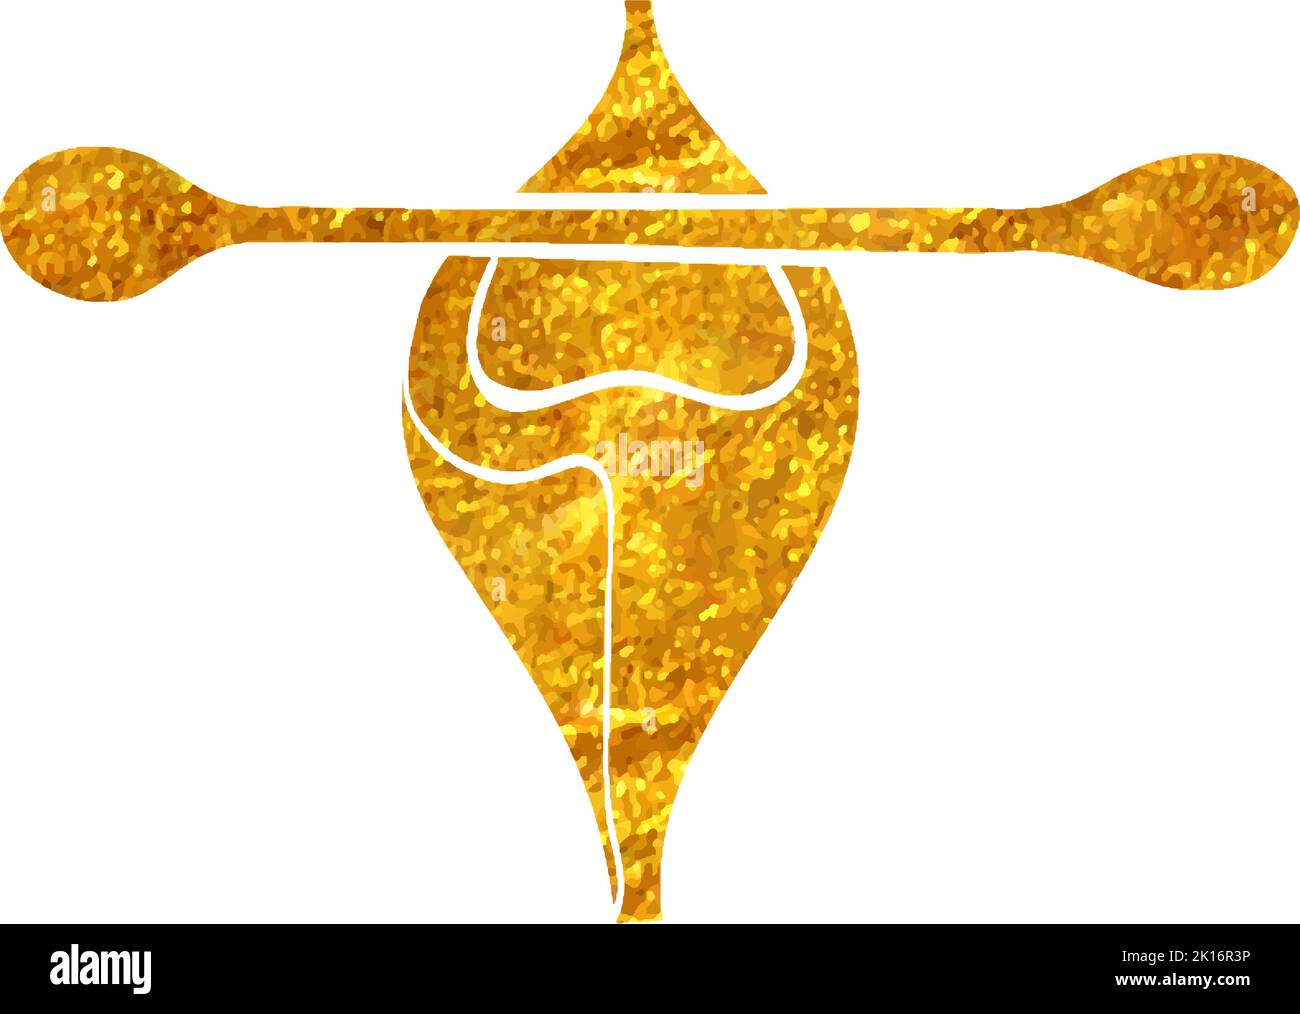 Handgezeichnetes Kanu-Symbol in Gold-Folie-Textur-Vektor-Illustration Stock Vektor